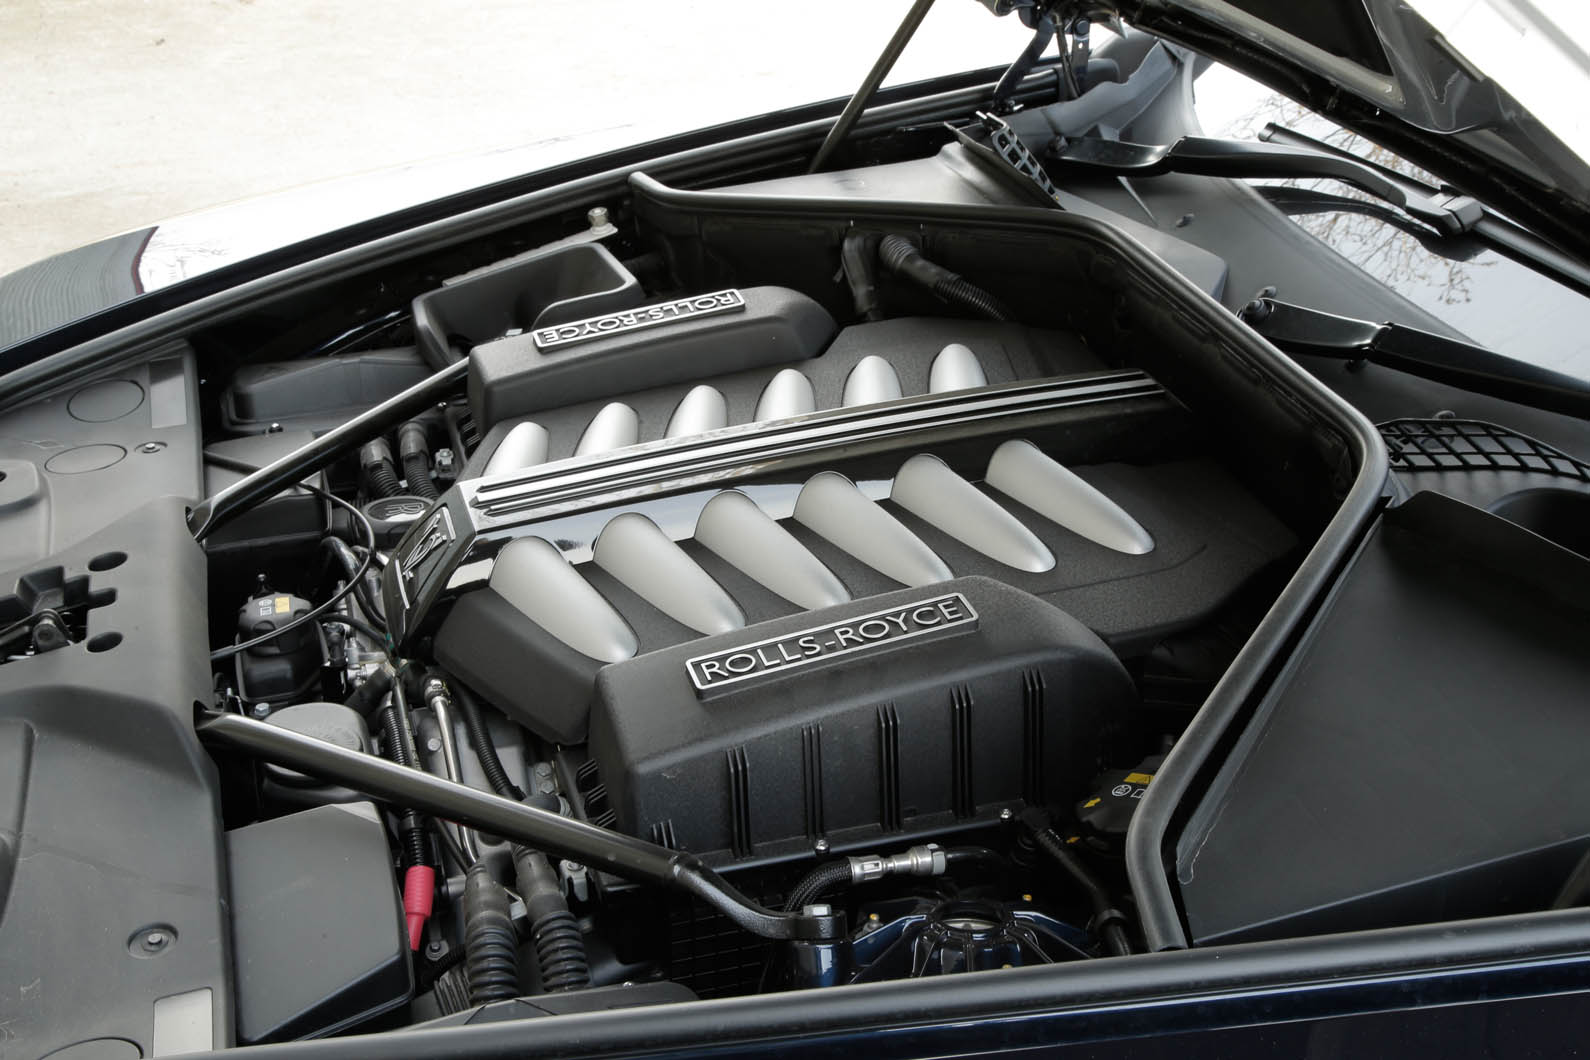 6.0-litre V12 Rolls-Royce Dawn engine